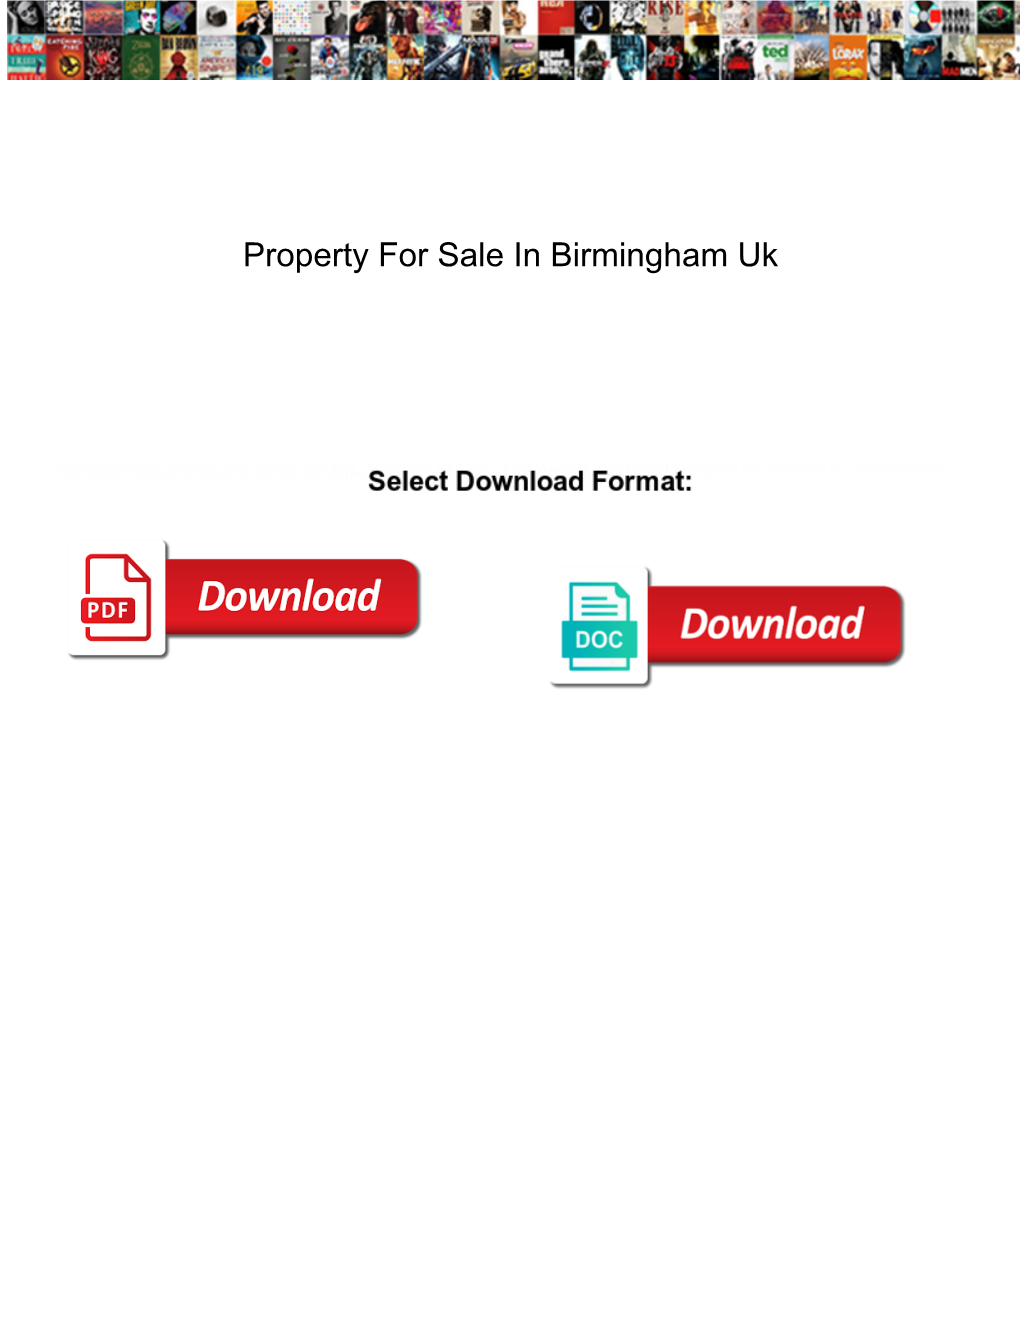 Property for Sale in Birmingham Uk